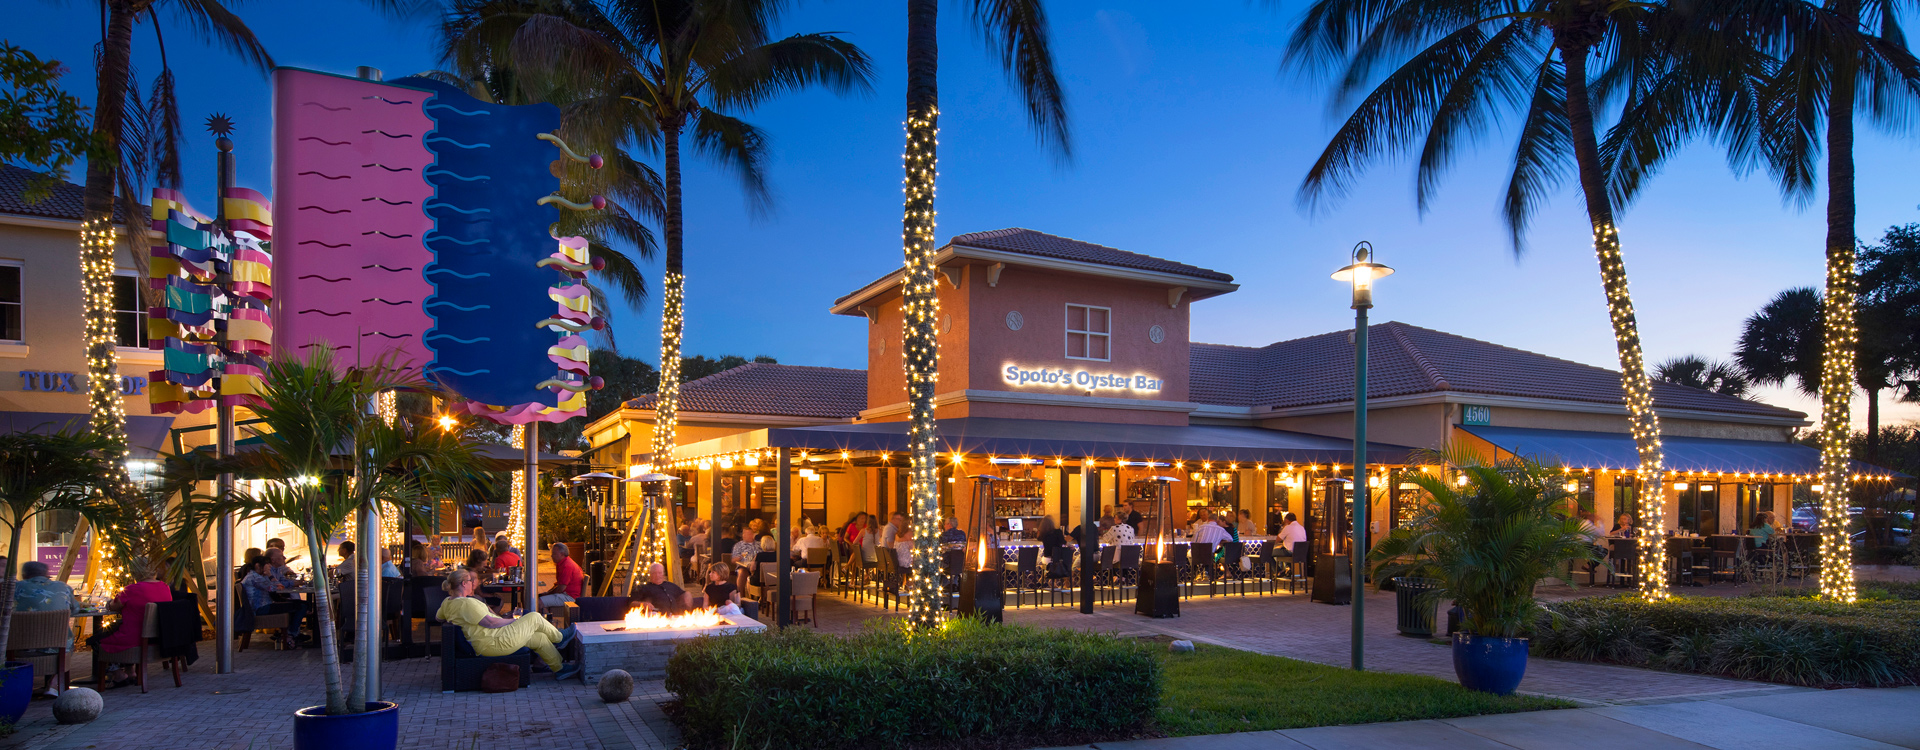 Spoto S Oyster Bar Seafood Restaurant Palm Beach Gardens Fl